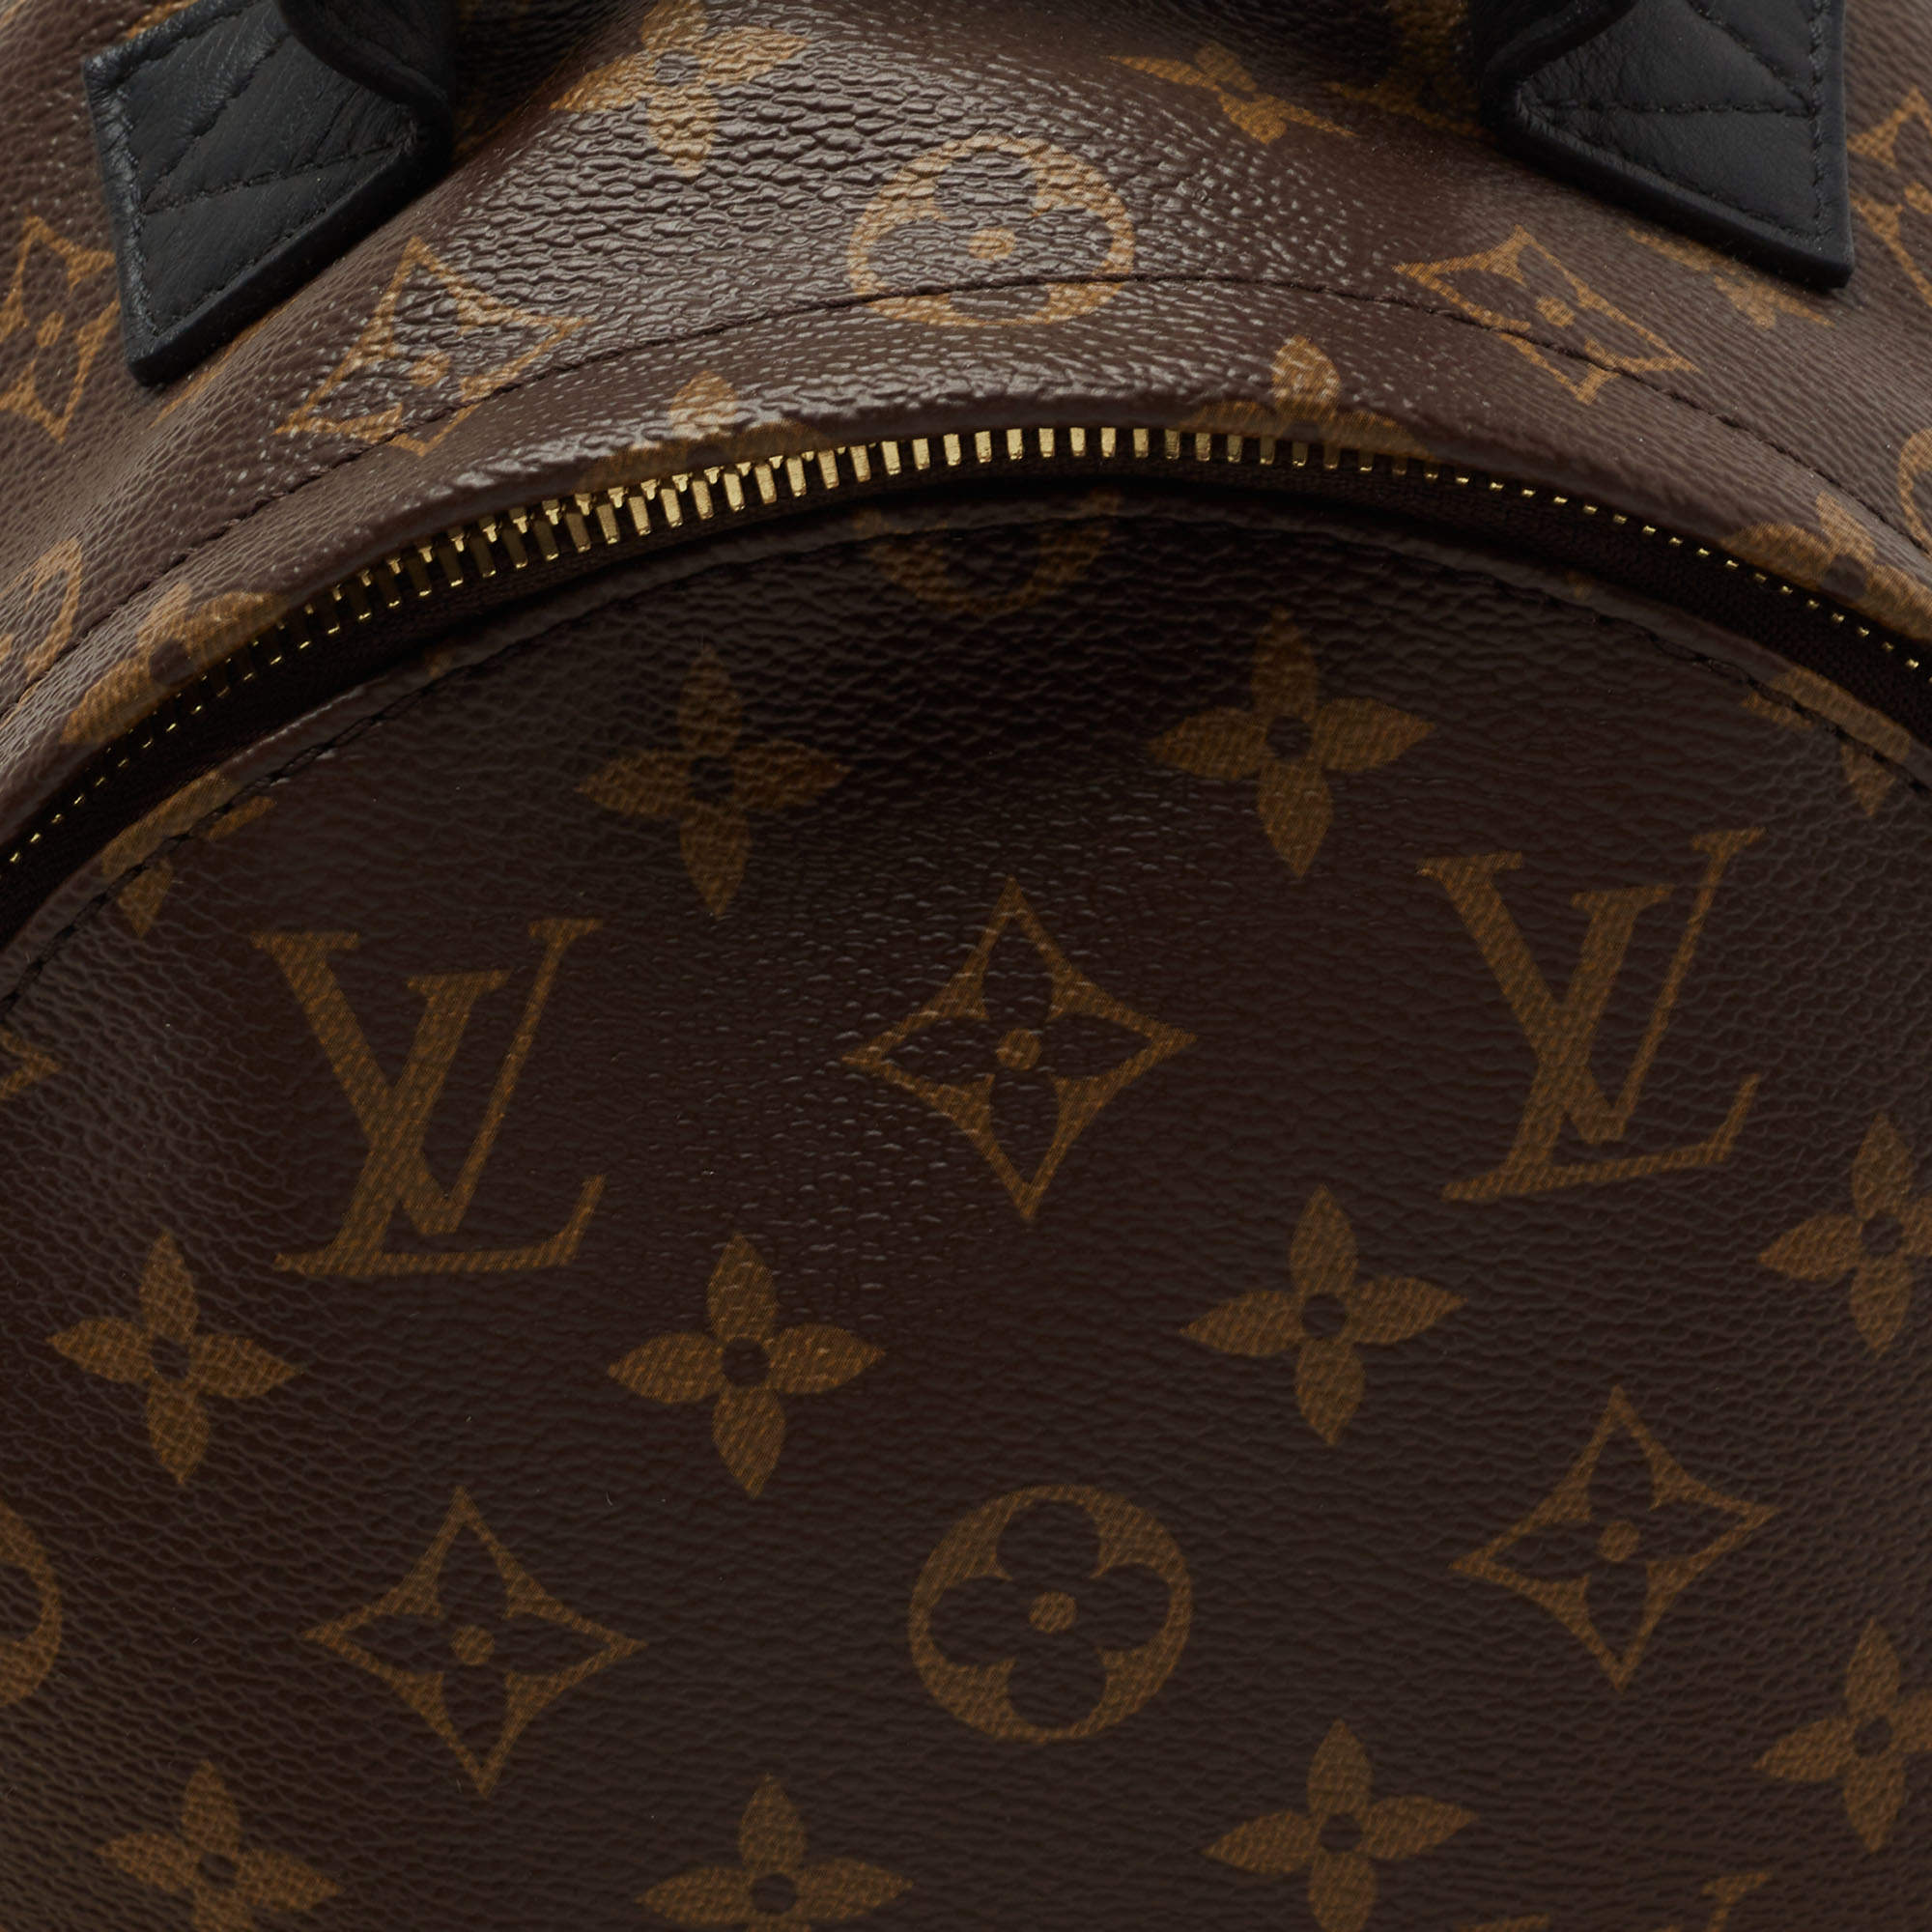 Louis Vuitton M42243 Randne PM Monogram Backpack Daypack Canvas Ladies, Size: 37cm x 28cm x 15cm, Brown